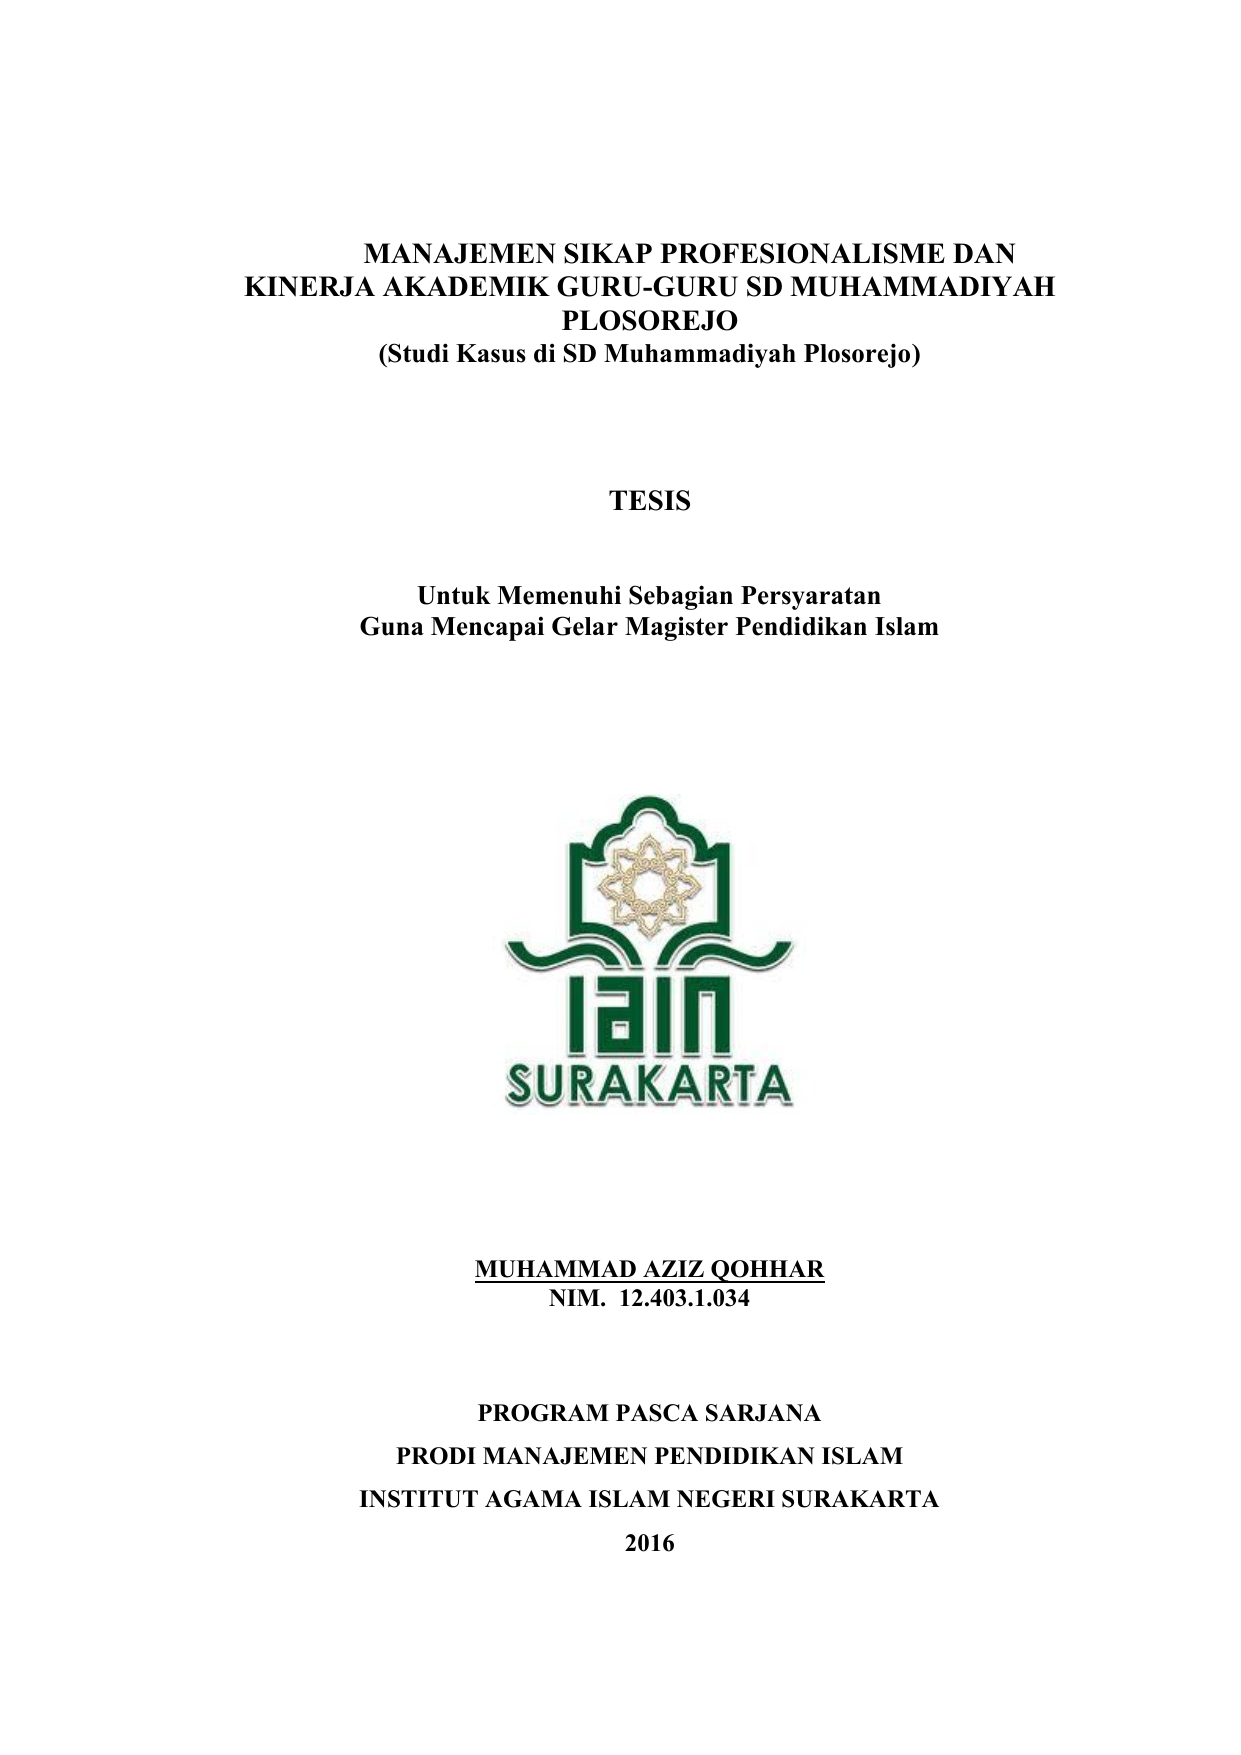 Contoh Tesis Manajemen Pendidikan Islam Contoh Soal Dan Materi Pelajaran 7